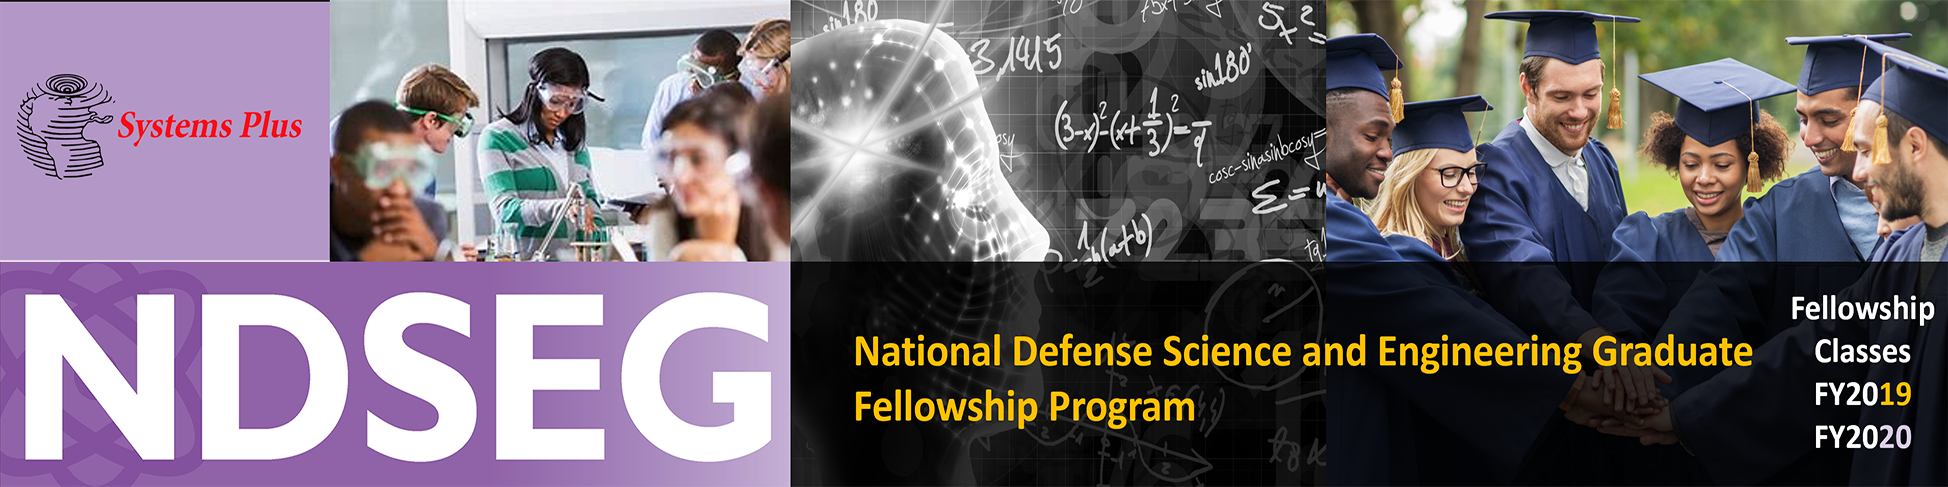 NDSEG Fellowship Program